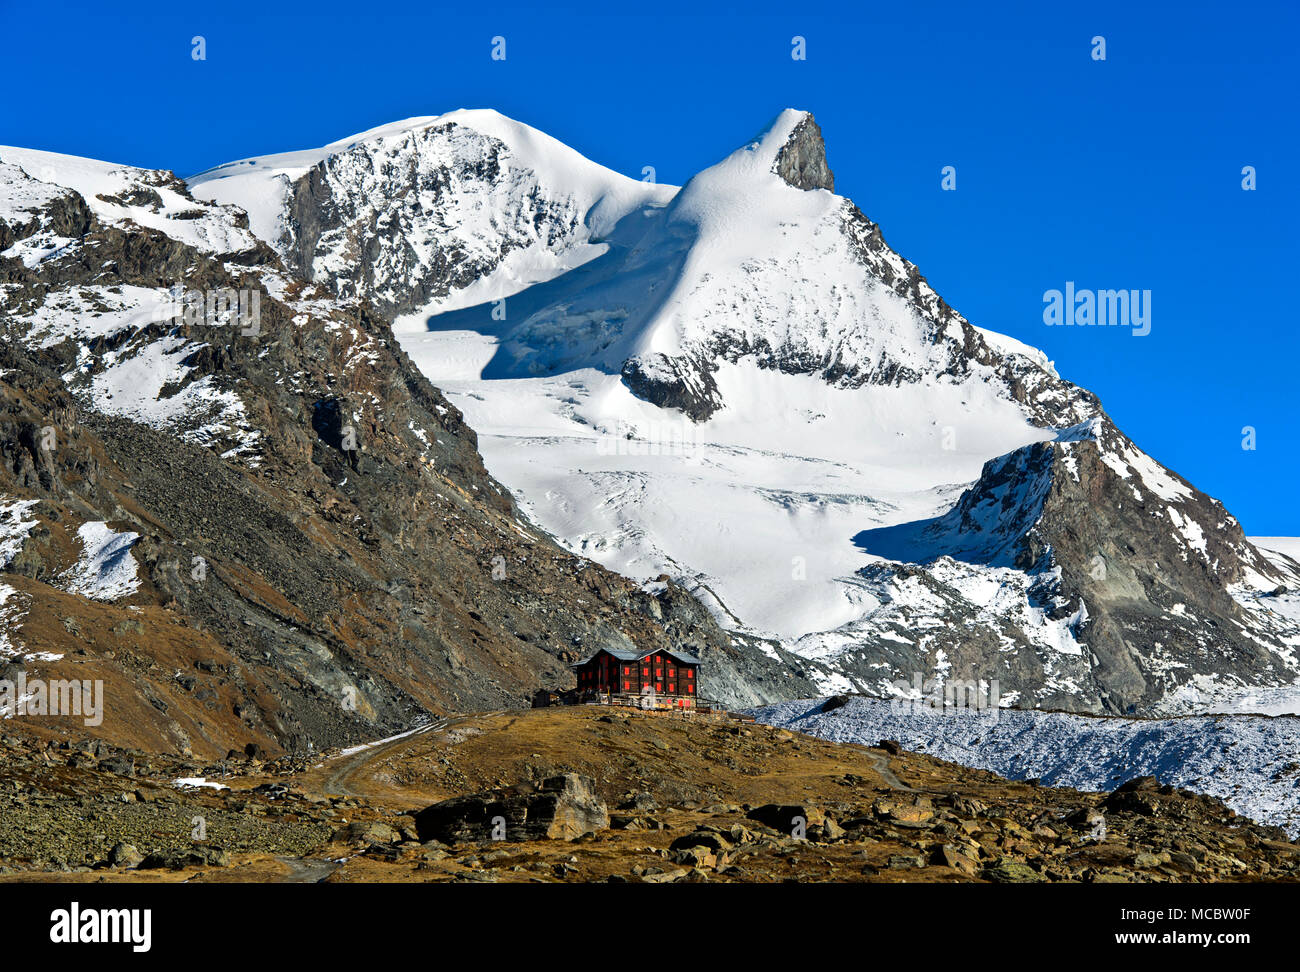 La storica Fluhalp ristorante di montagna sotto i picchi Strahlhorn e Adlerhorn, Zermatt, Vallese, Svizzera Foto Stock